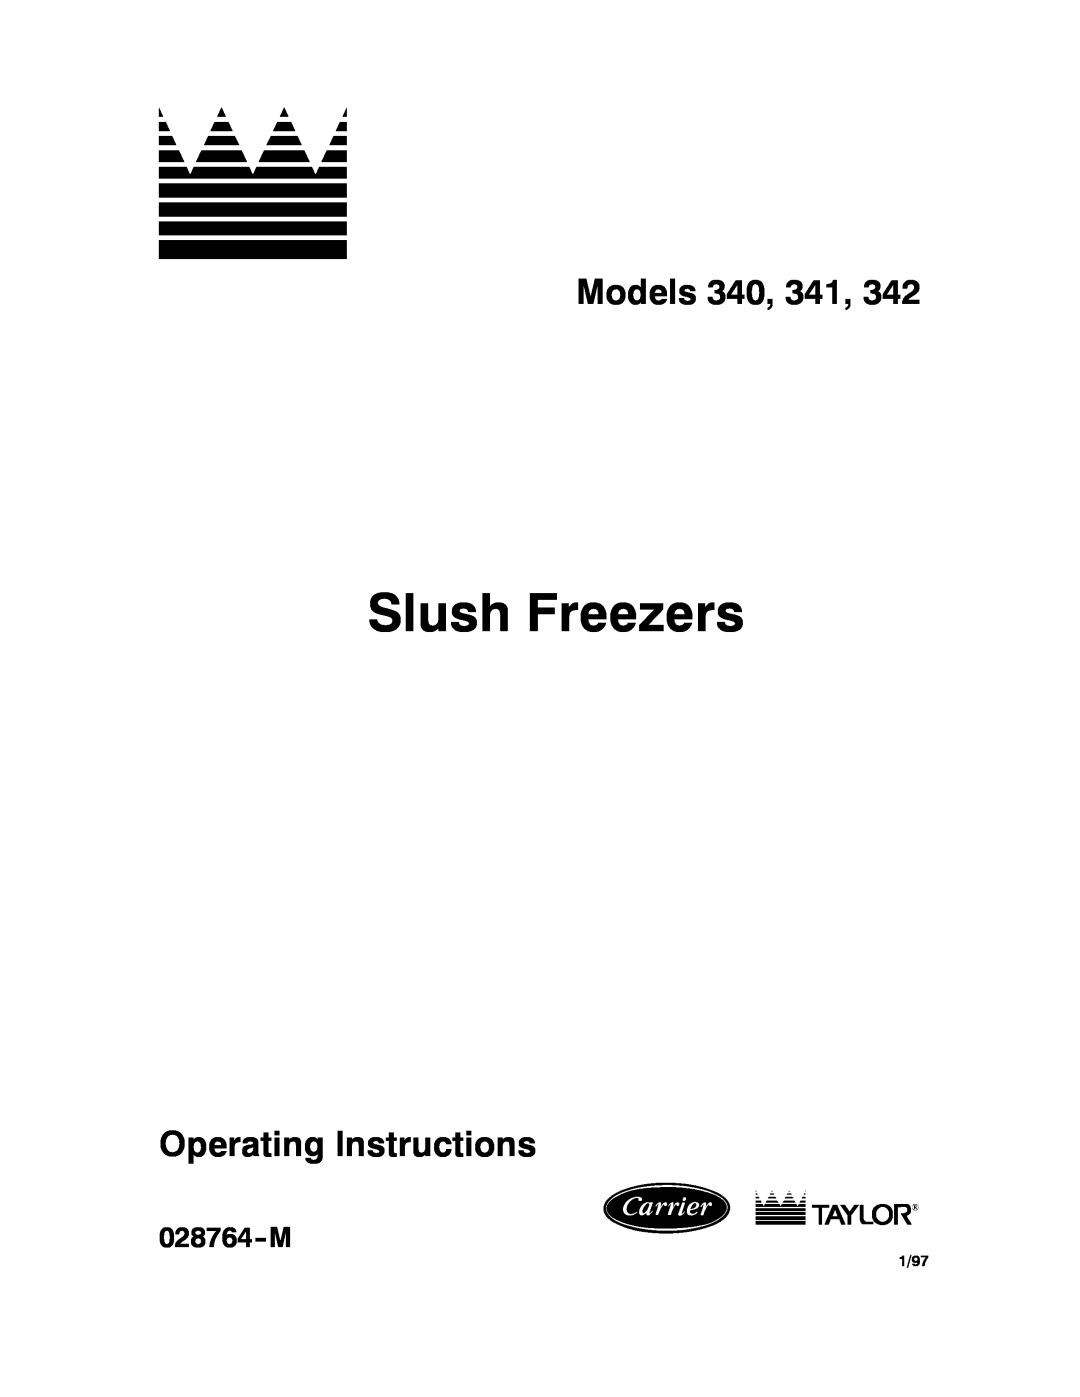 Taylor 342, 341 manual Slush Freezers, Models 340, Operating Instructions, 028764-M, 1/97 